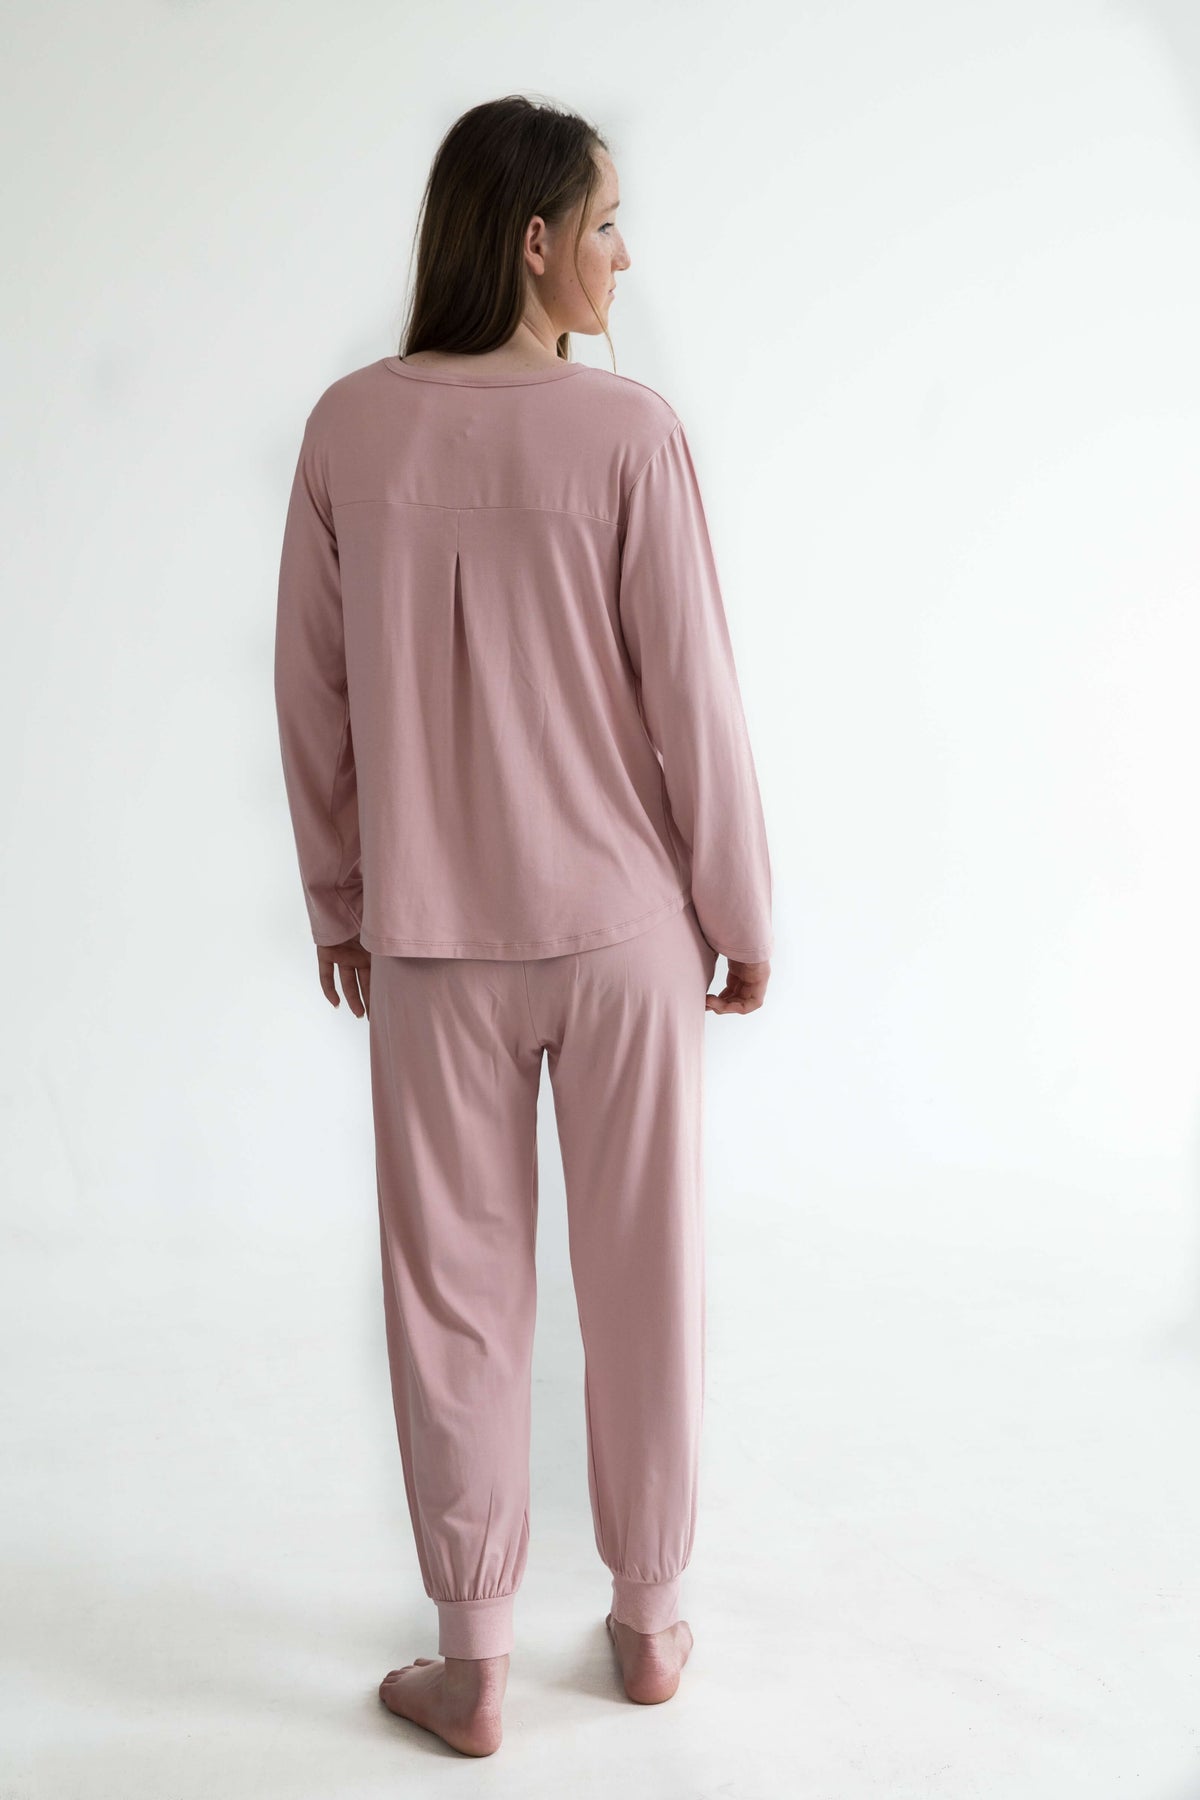 pink teen girls winter long sleeve bamboo pyjama top by Love Haidee Australia back